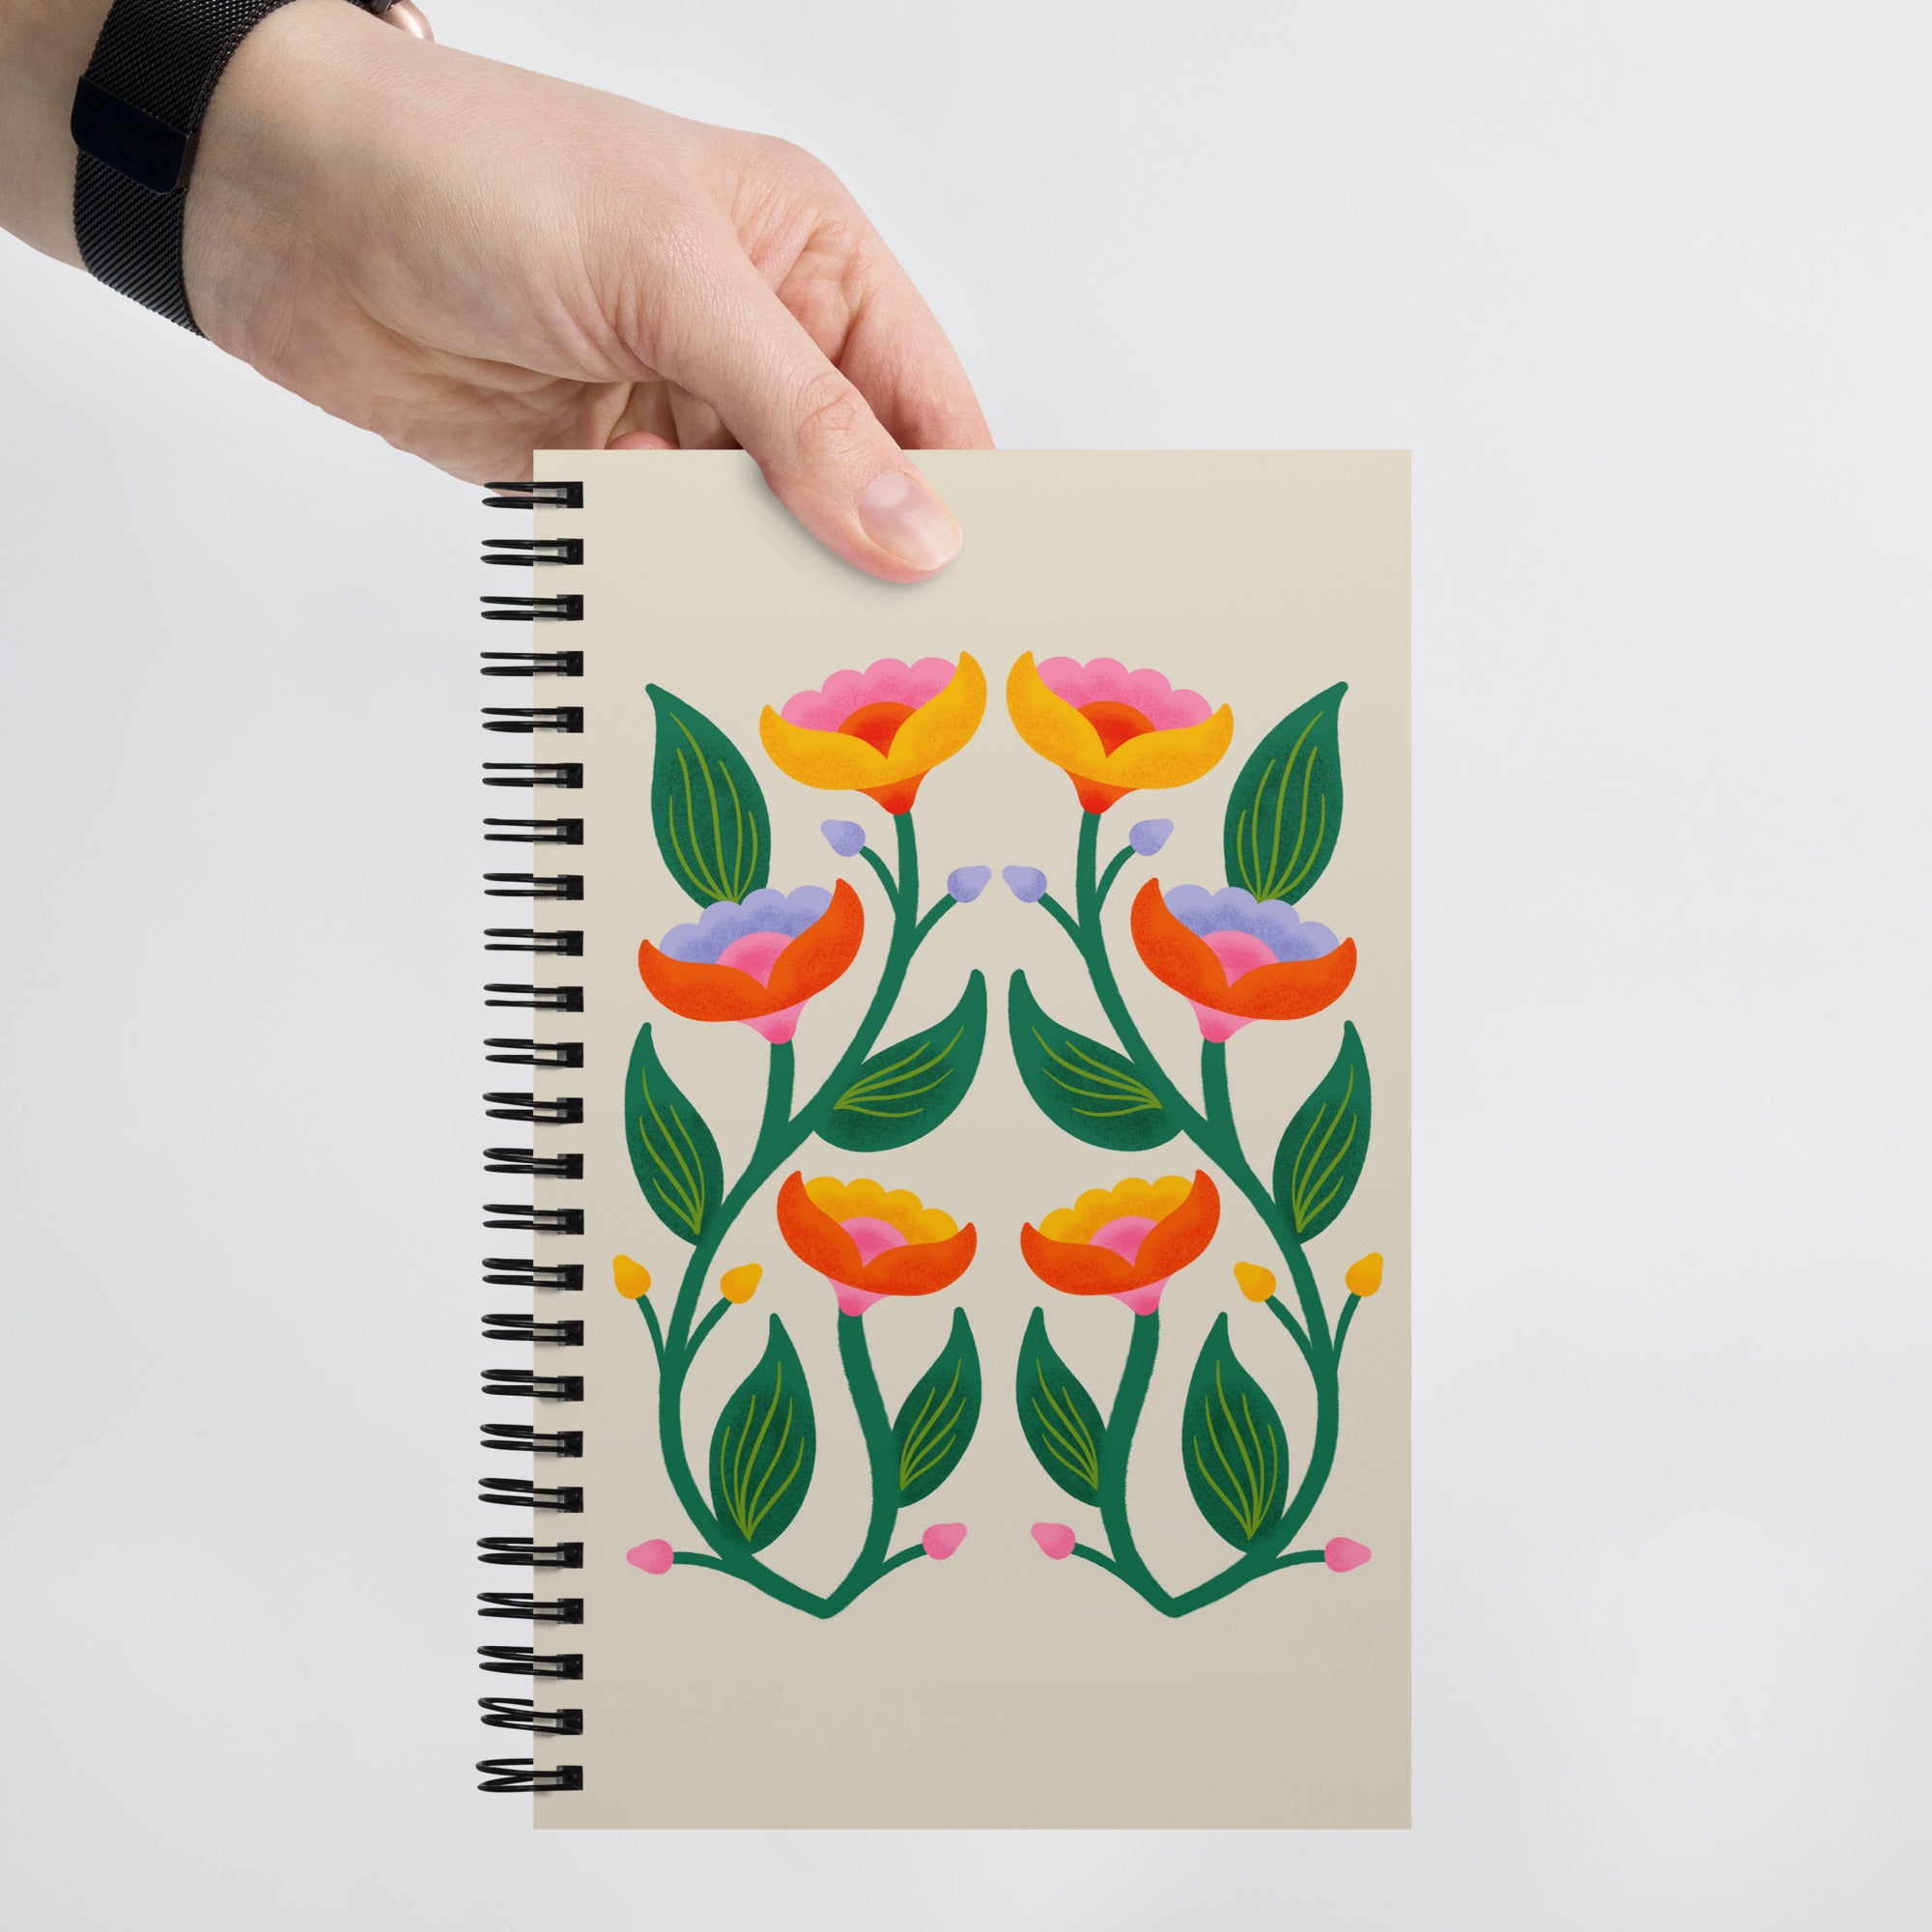 Symmetrical Flowers 2 Notebook